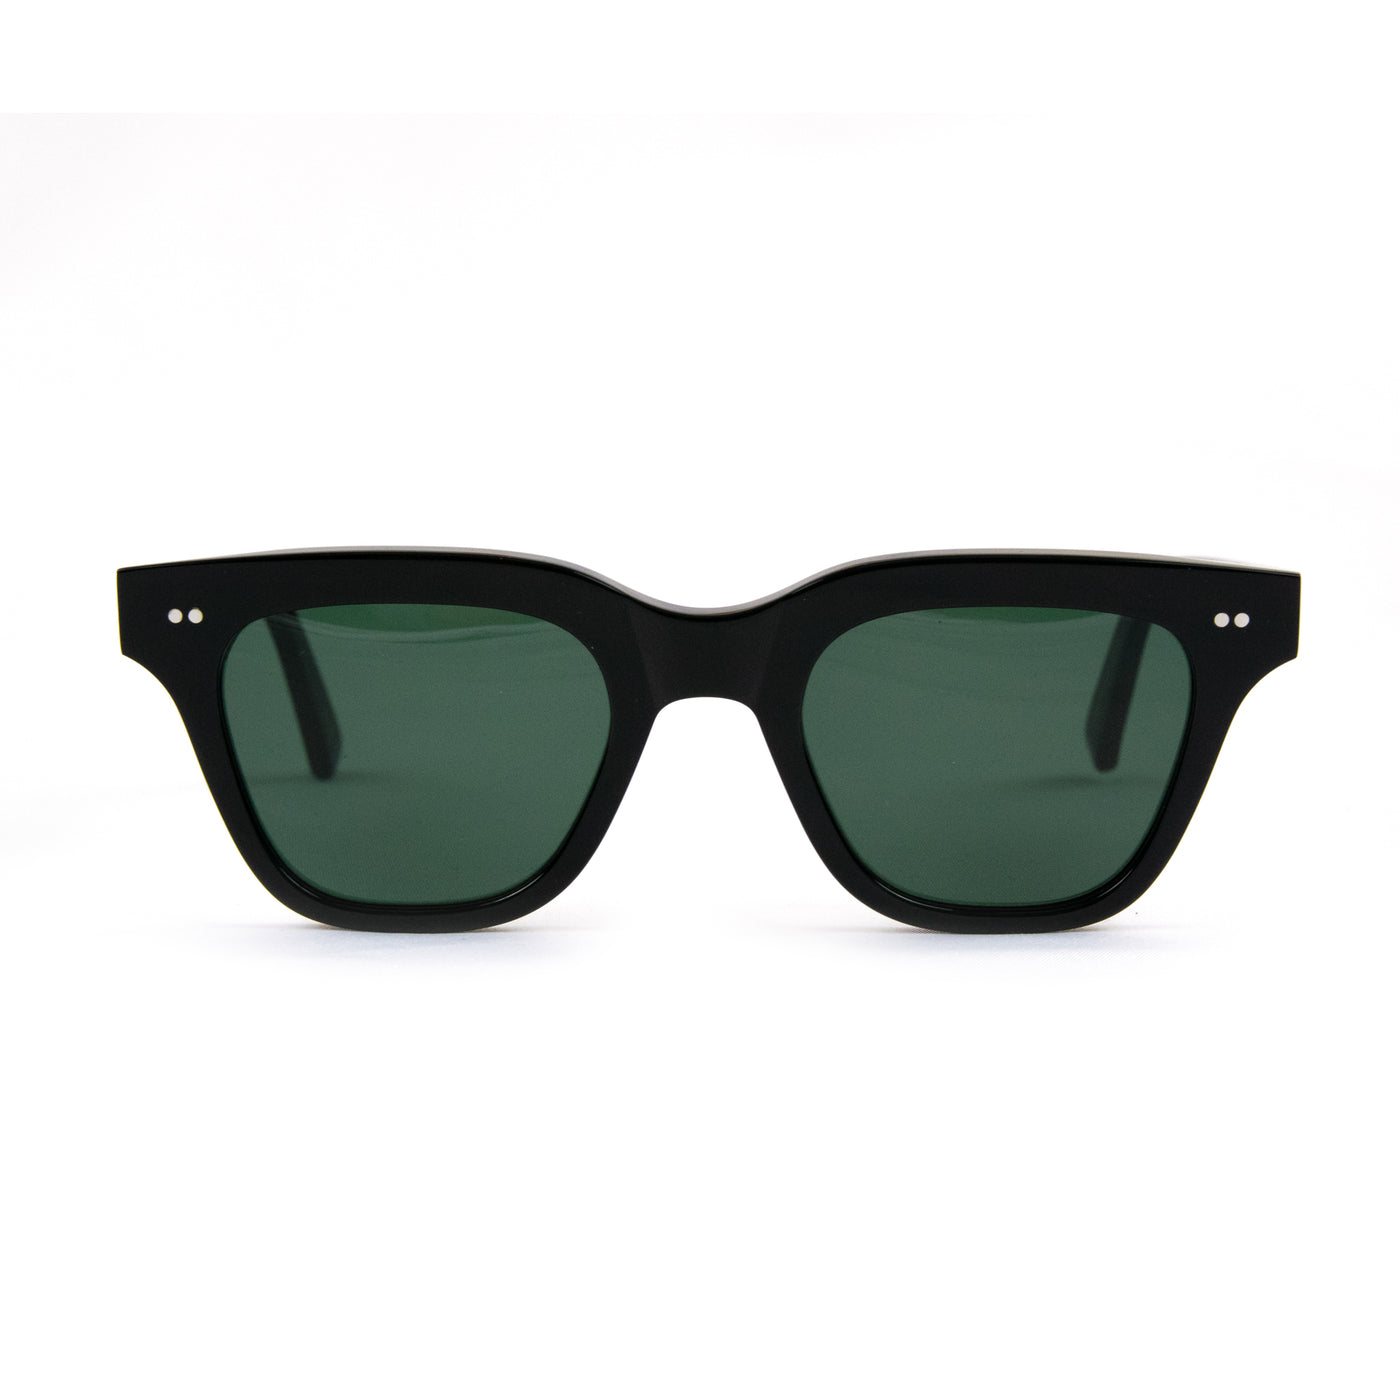 Monokel Ellis Black Sunglasses Green Solid Lens FRONT